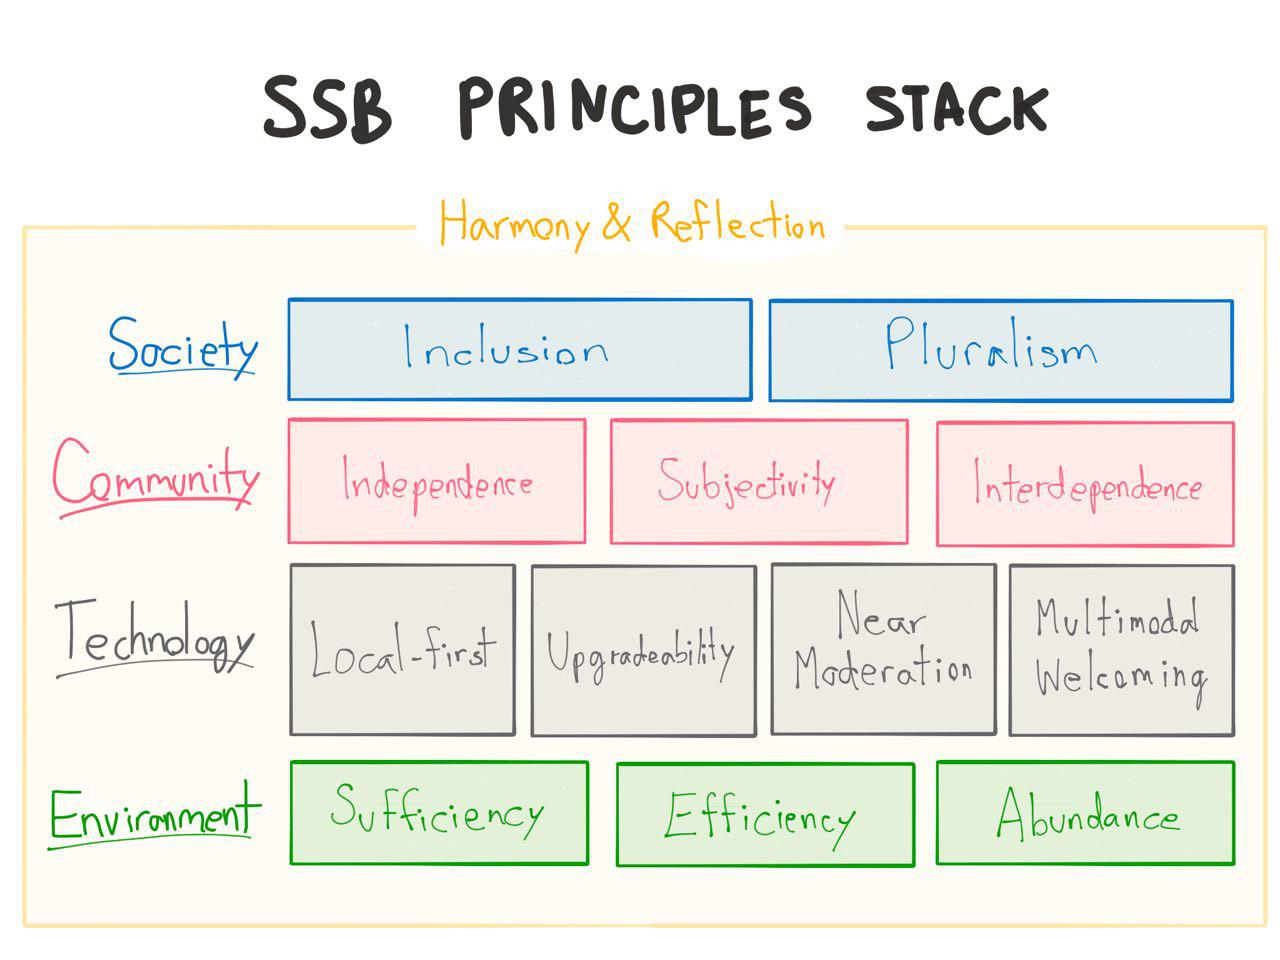 image of principles stack